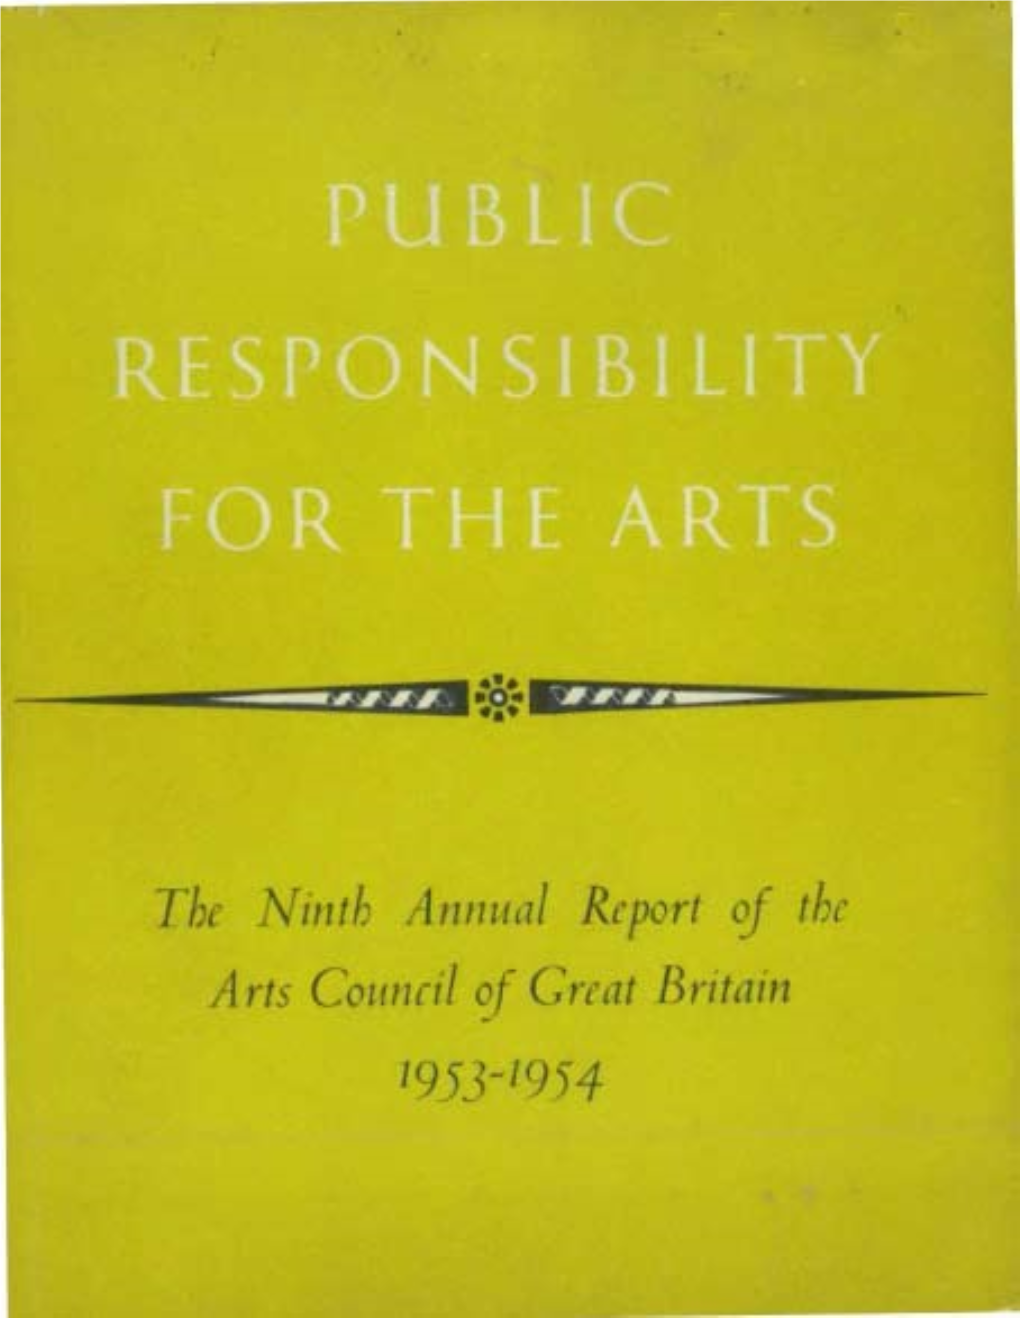 1953-54 Annual Report